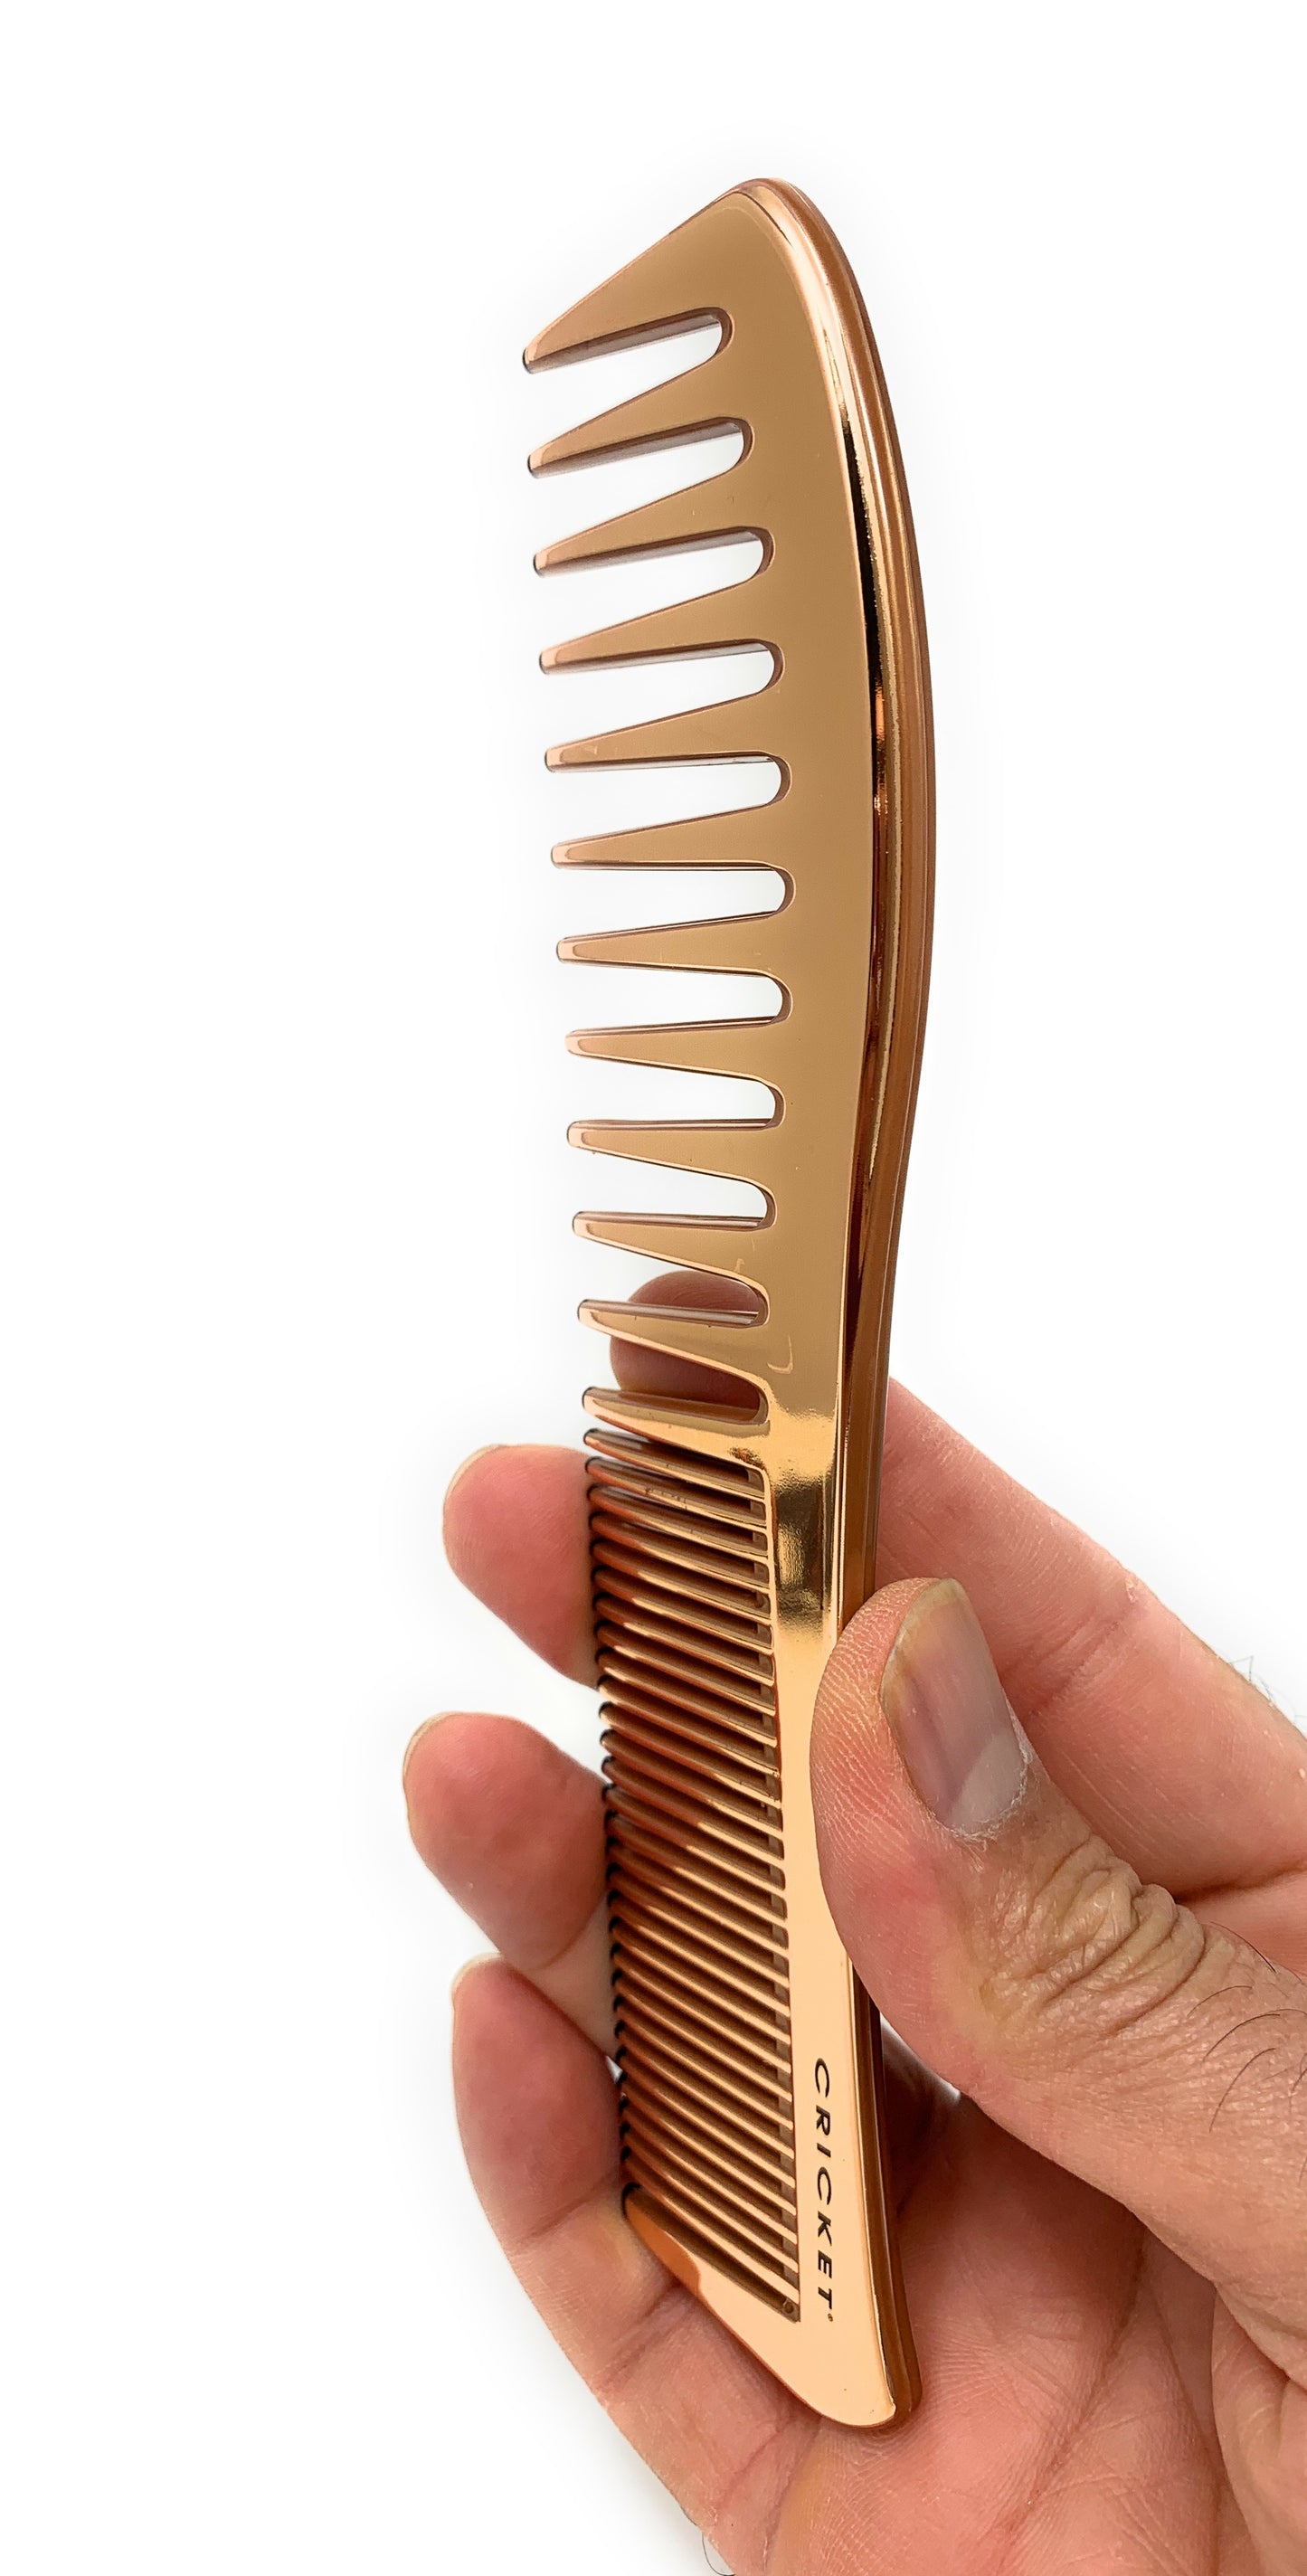 Cricket Copper Clean Wide Teeth Comb All Purpose Copper Infused Comb 1 Pc.